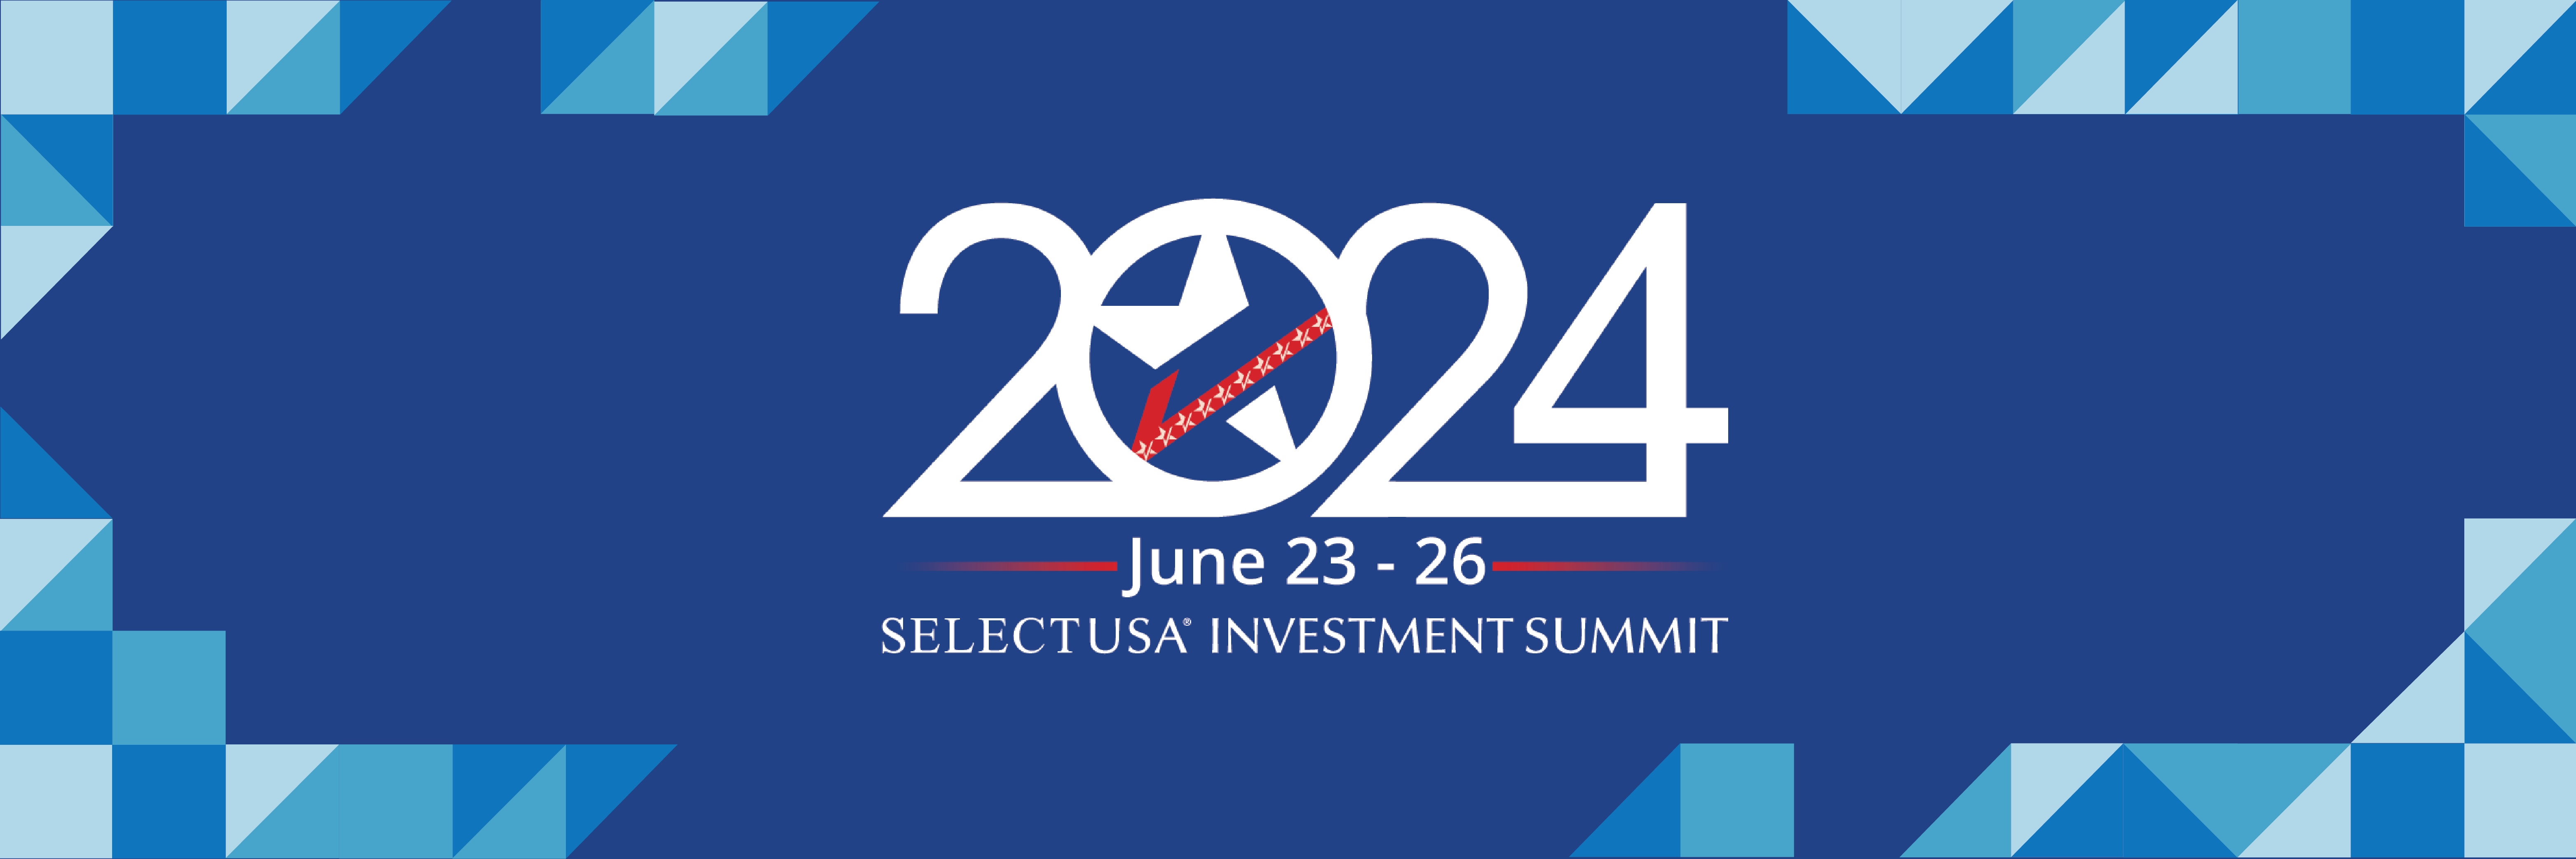 2024 Investment Summit Logo.